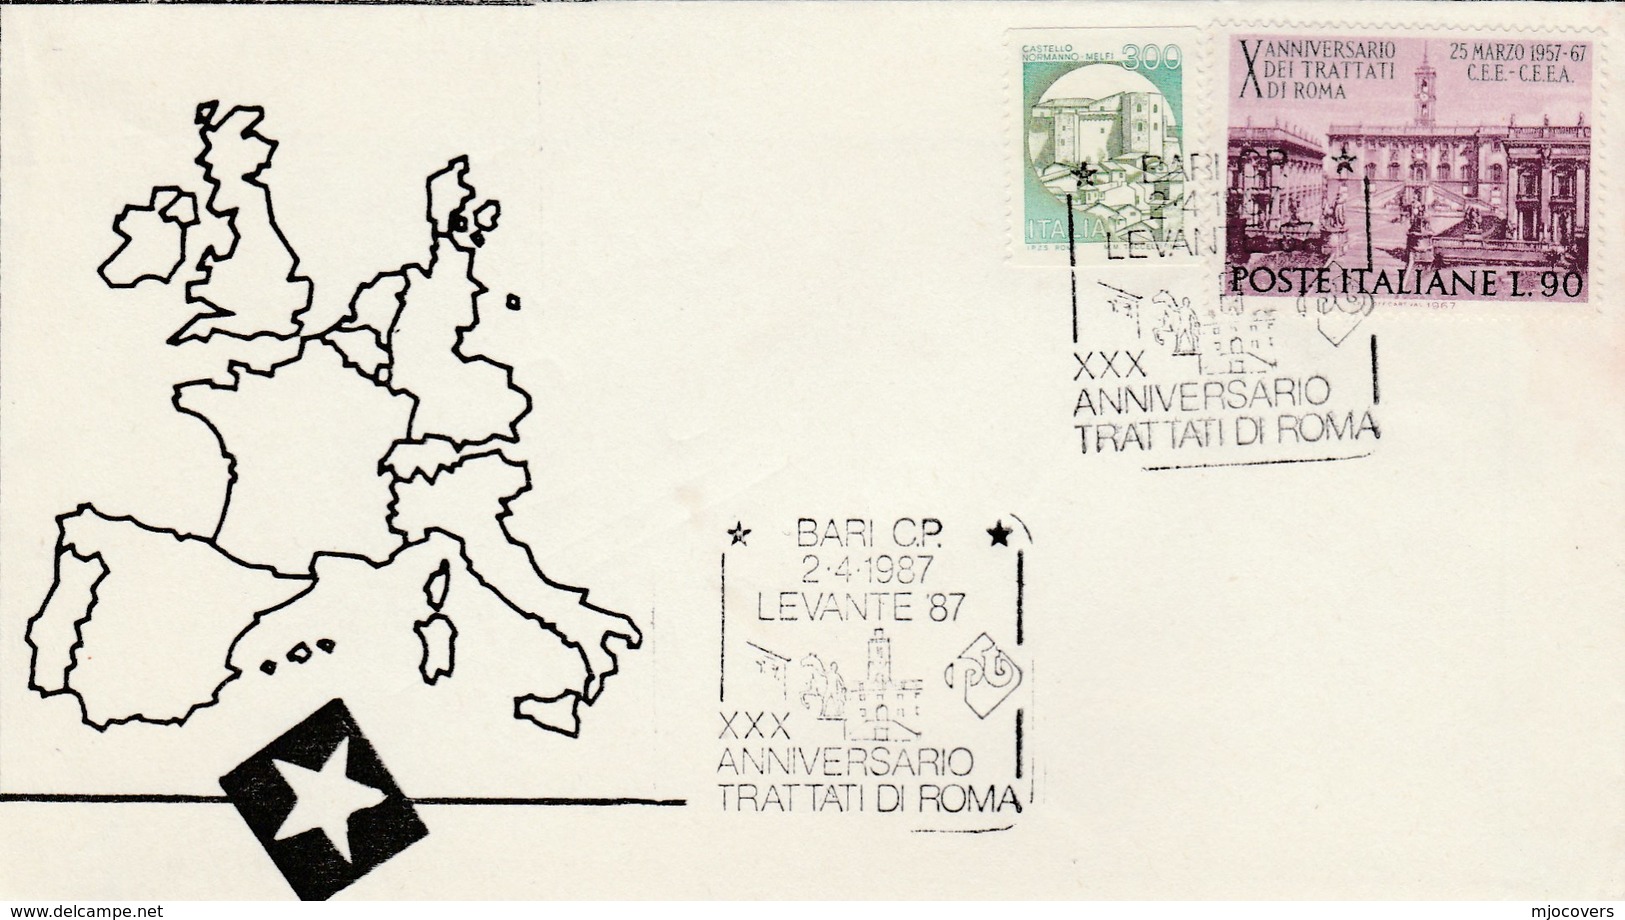 1987 Bari  ITALY EVENT COVER TREATY OF ROME 30th ANNIV European Community Stamps - 1981-90: Marcophilia